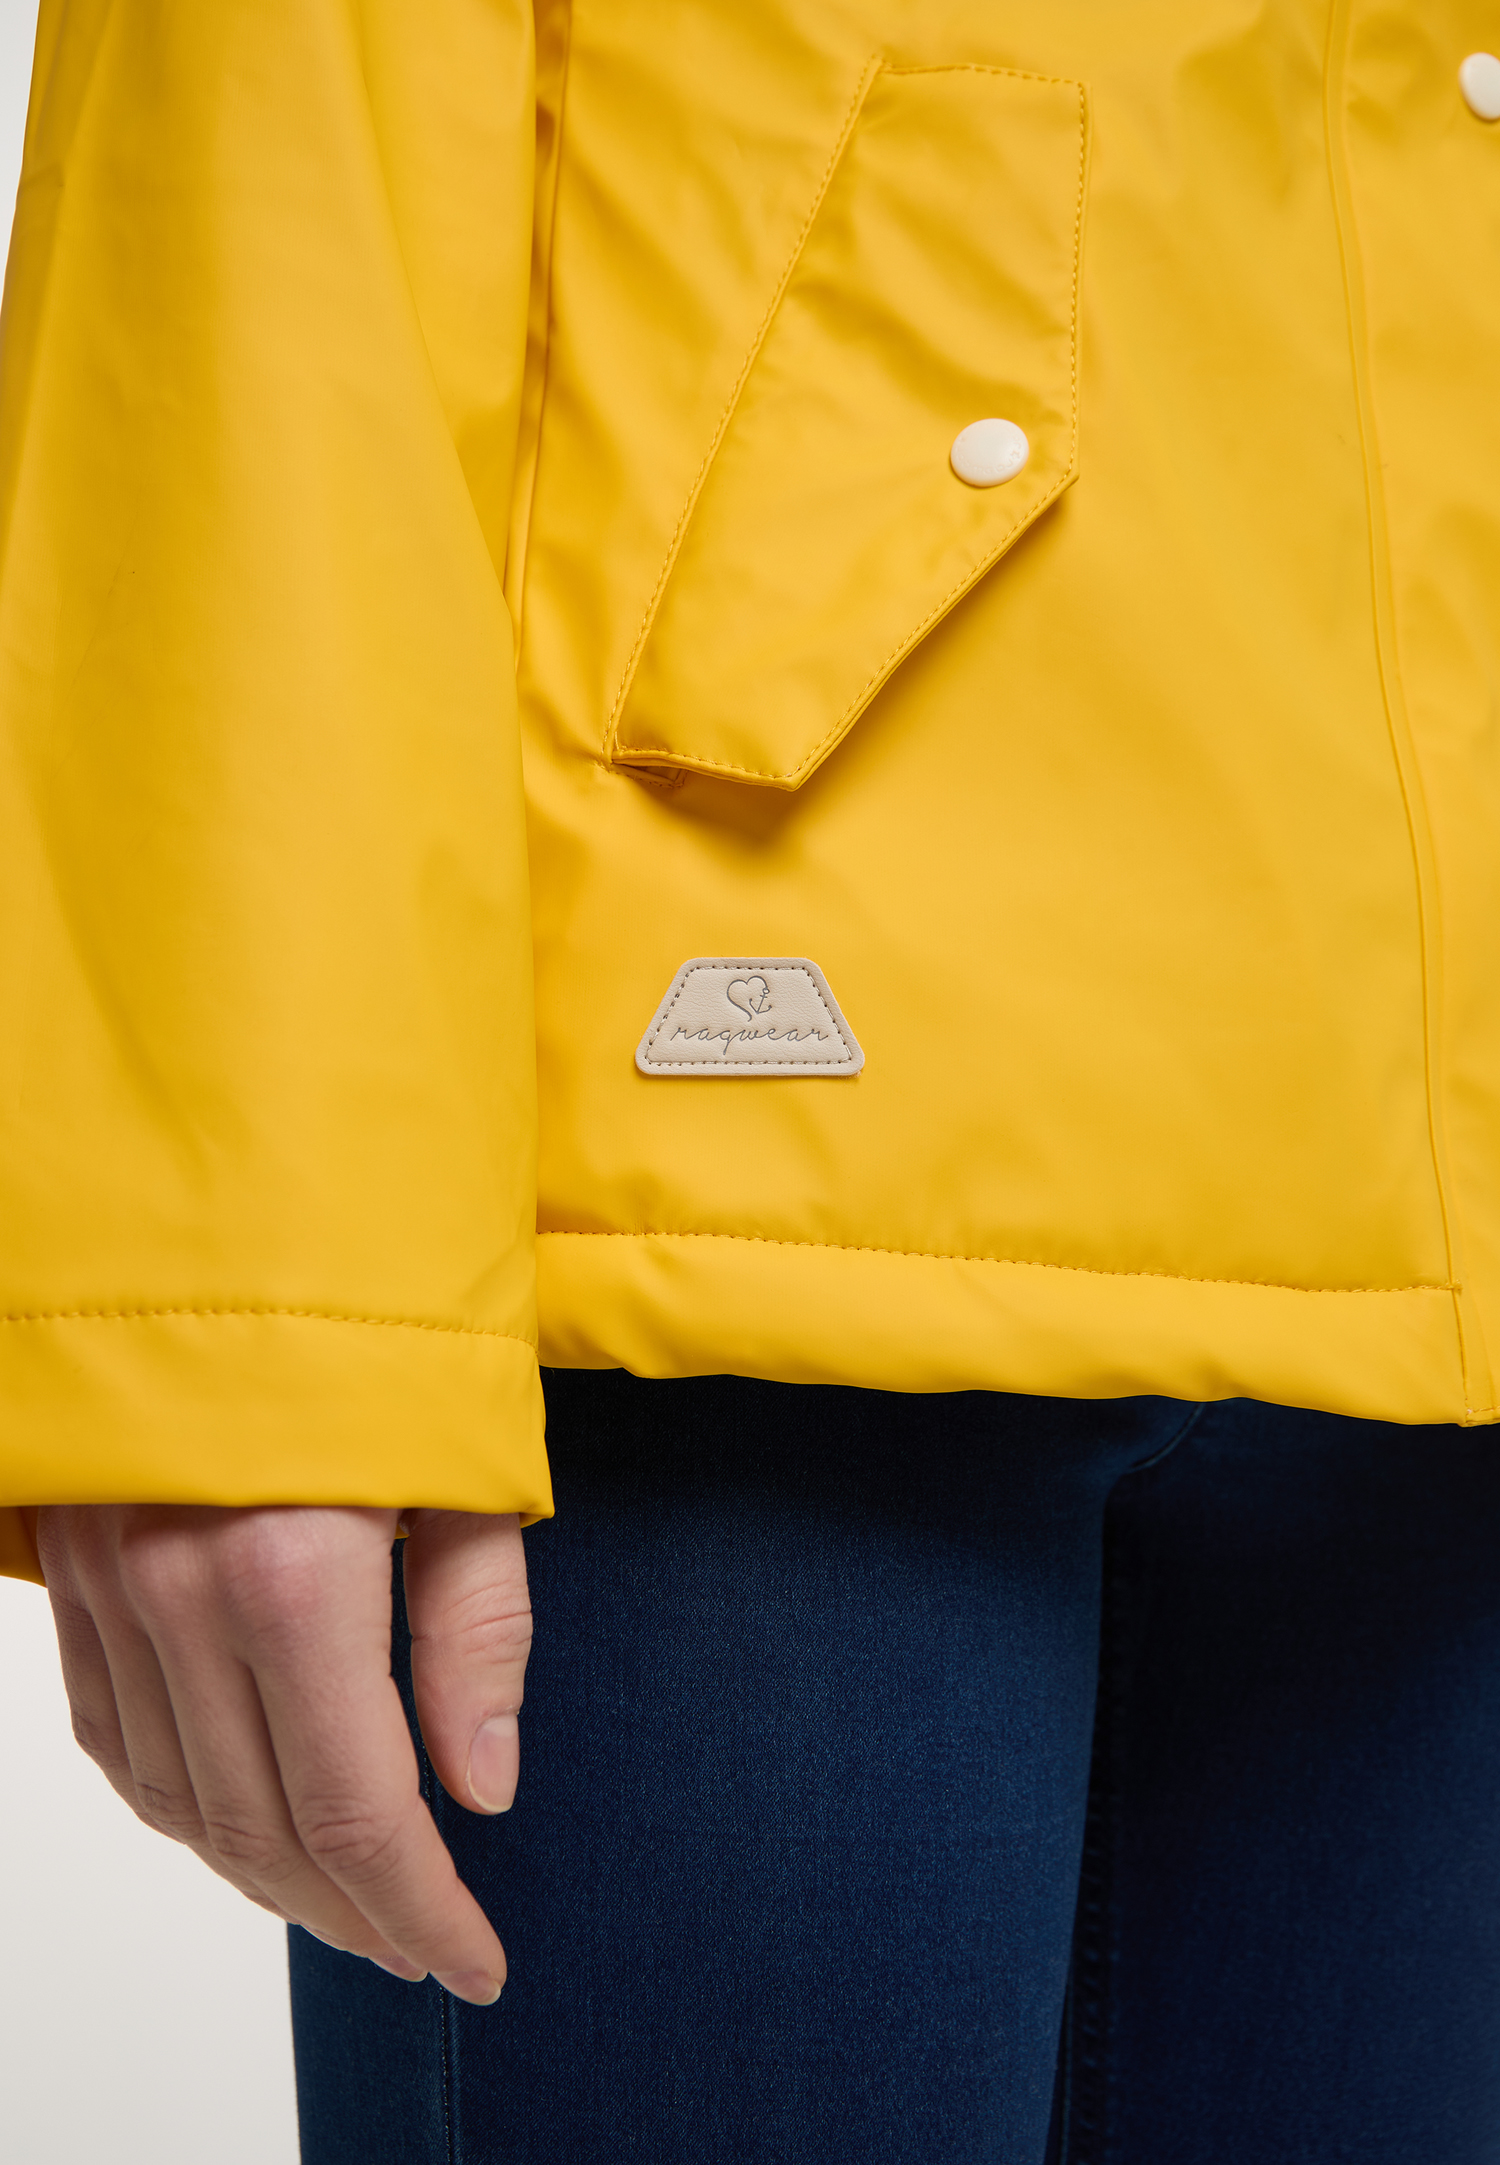 Top Stylish rain jackets to | | wear season! ragwear Magazine this